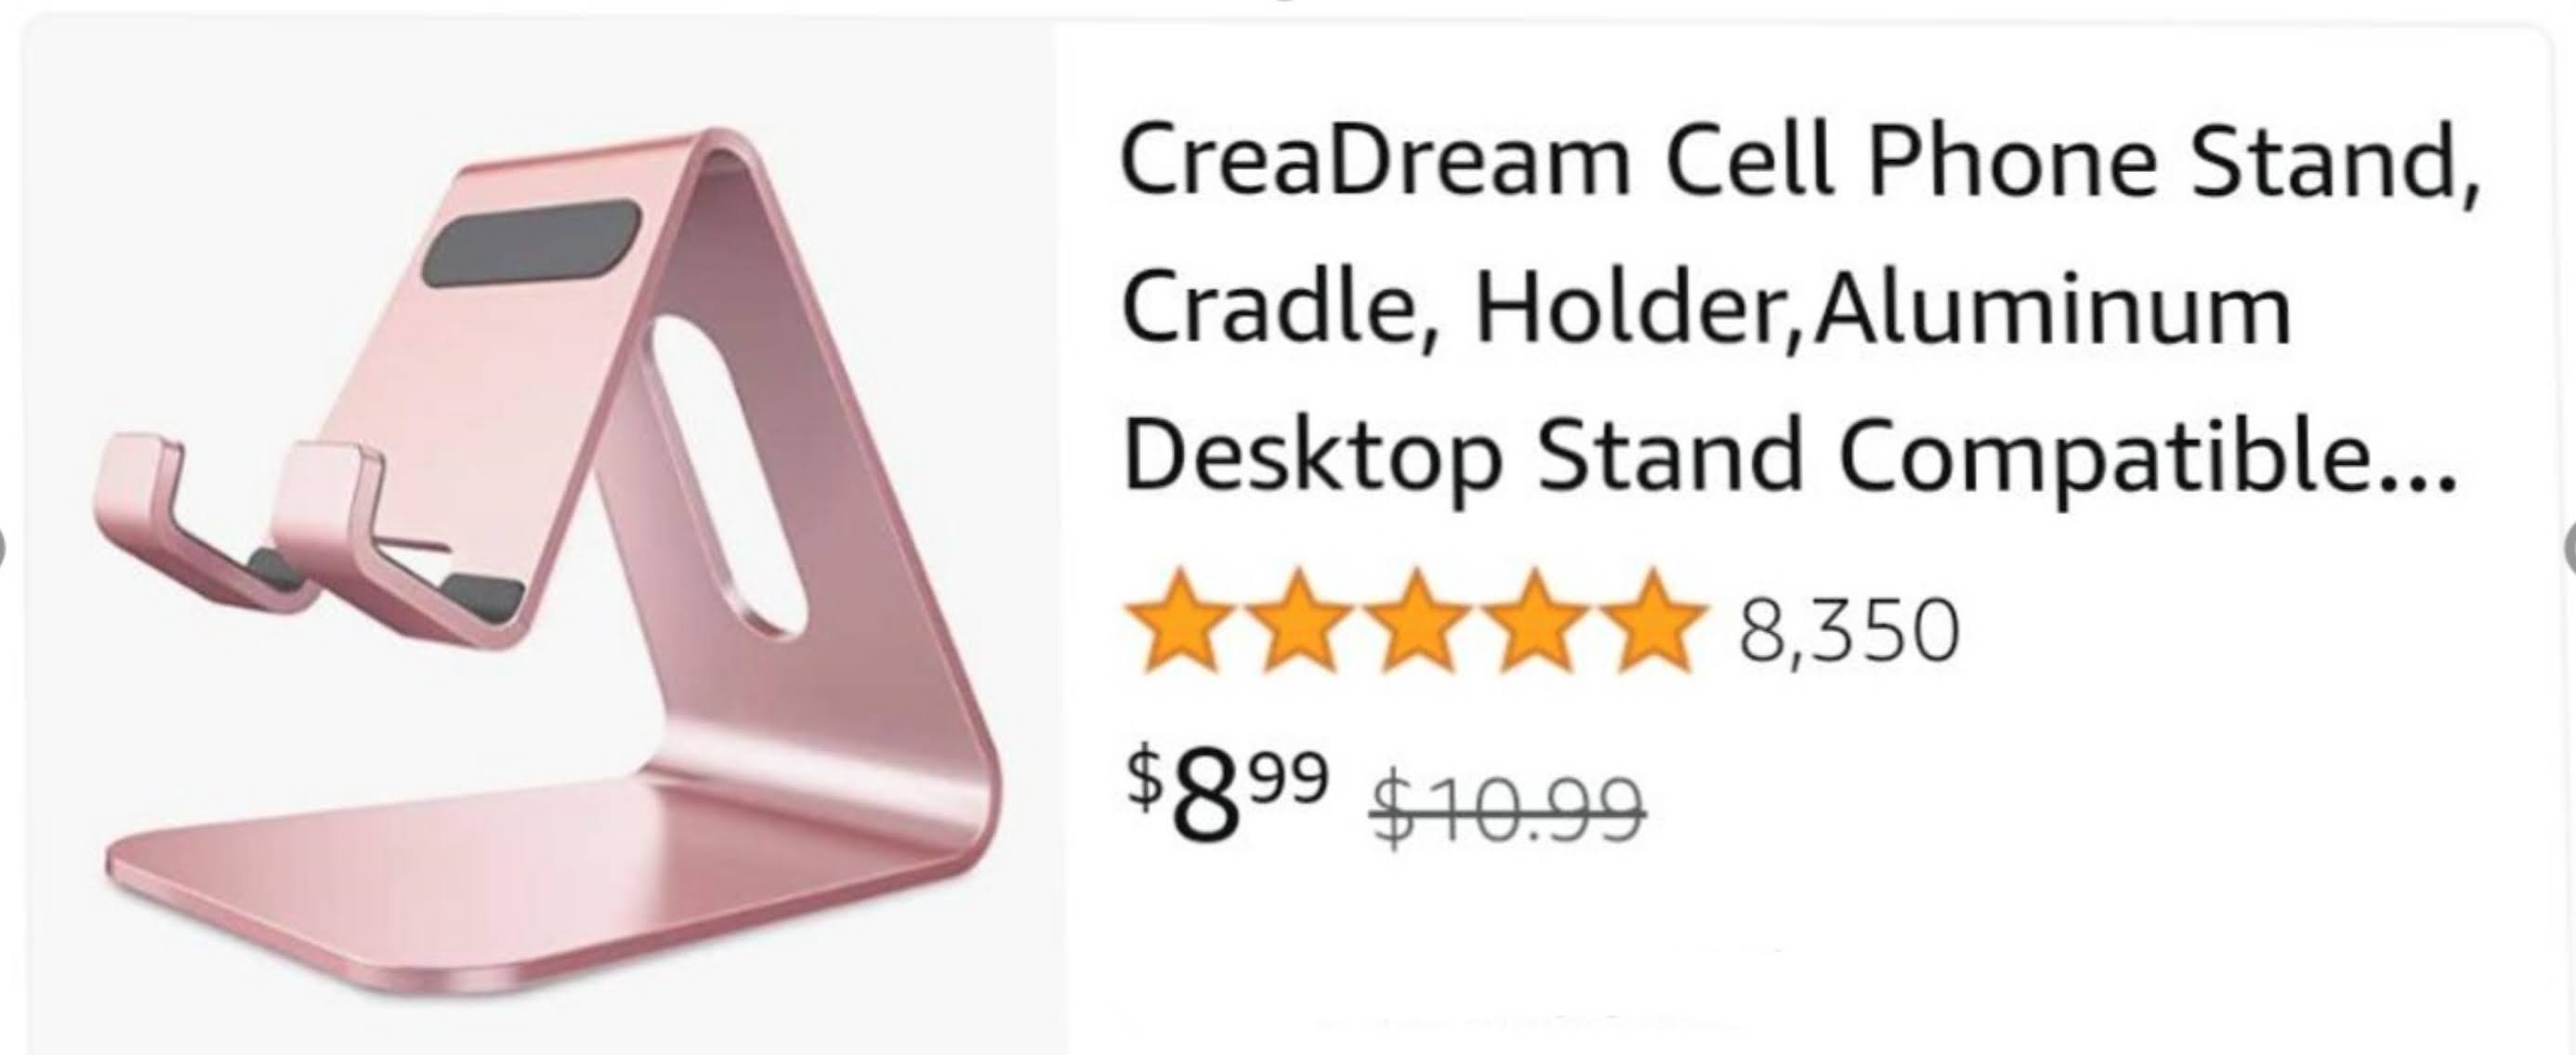 creadream phone stand $9.99